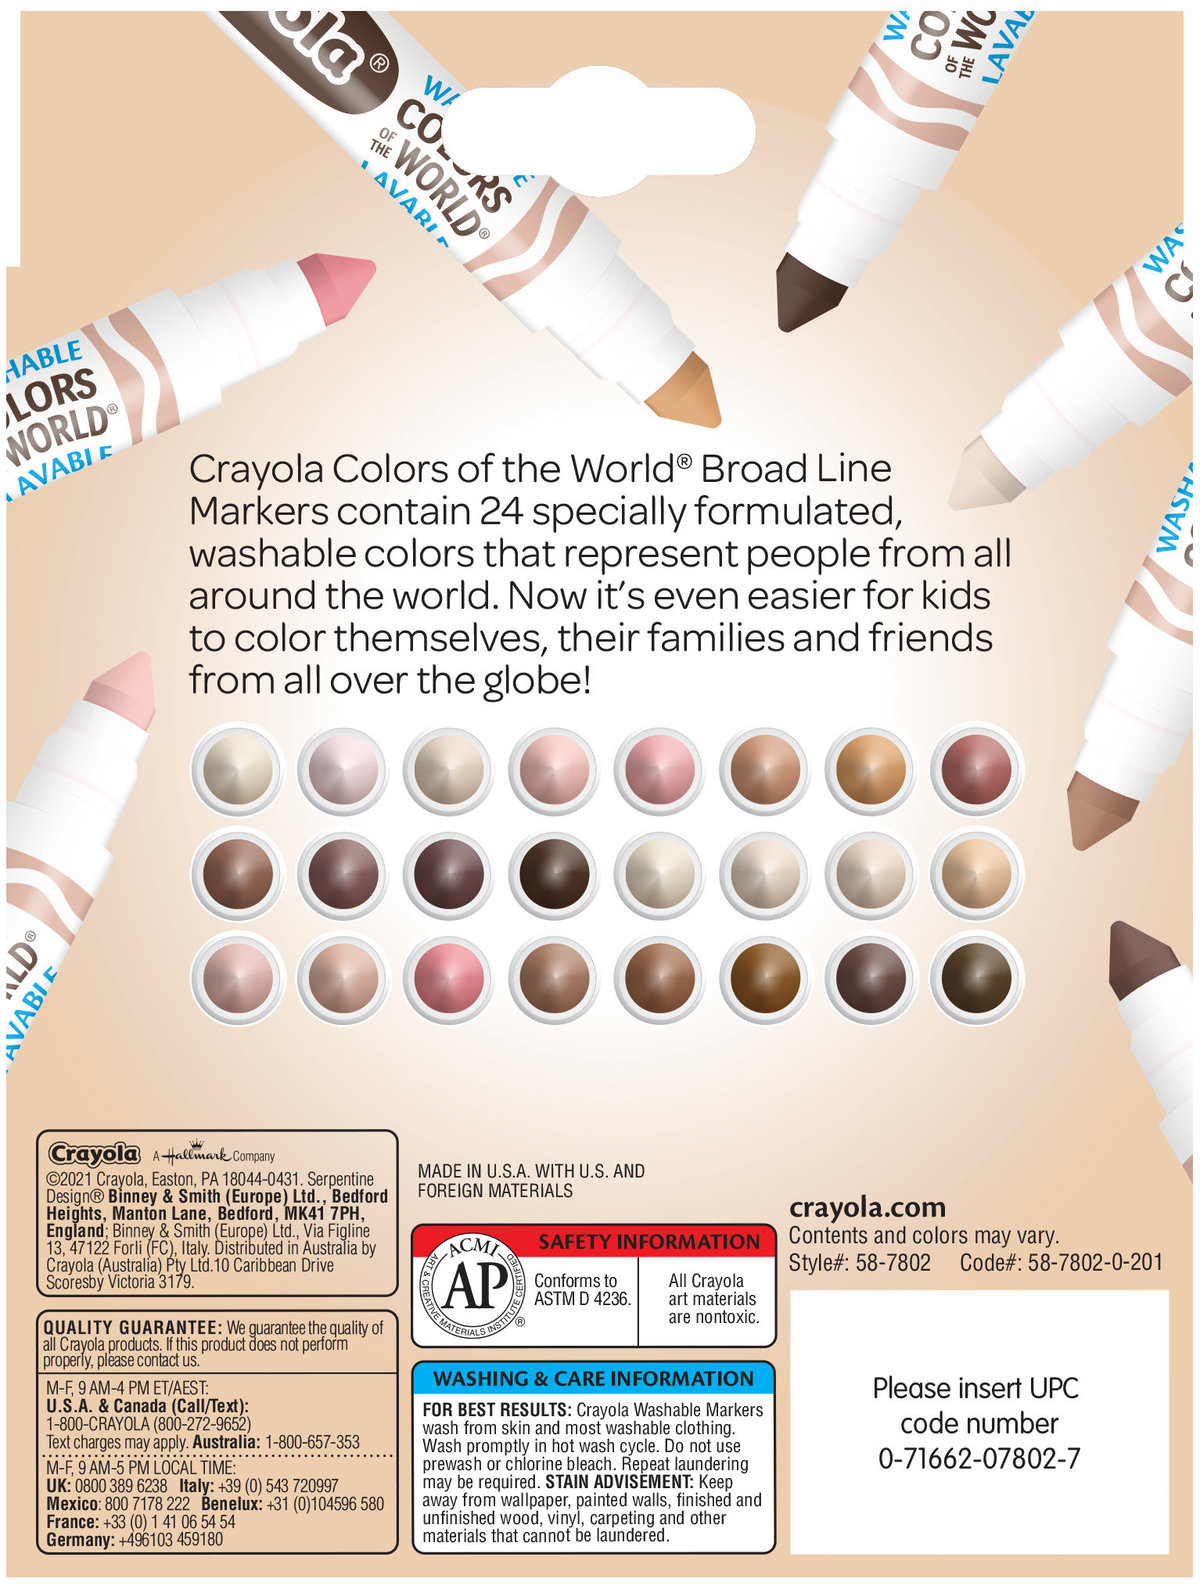 Crayola Colors of the World Skin Tone Crayons & #TrueSelfie